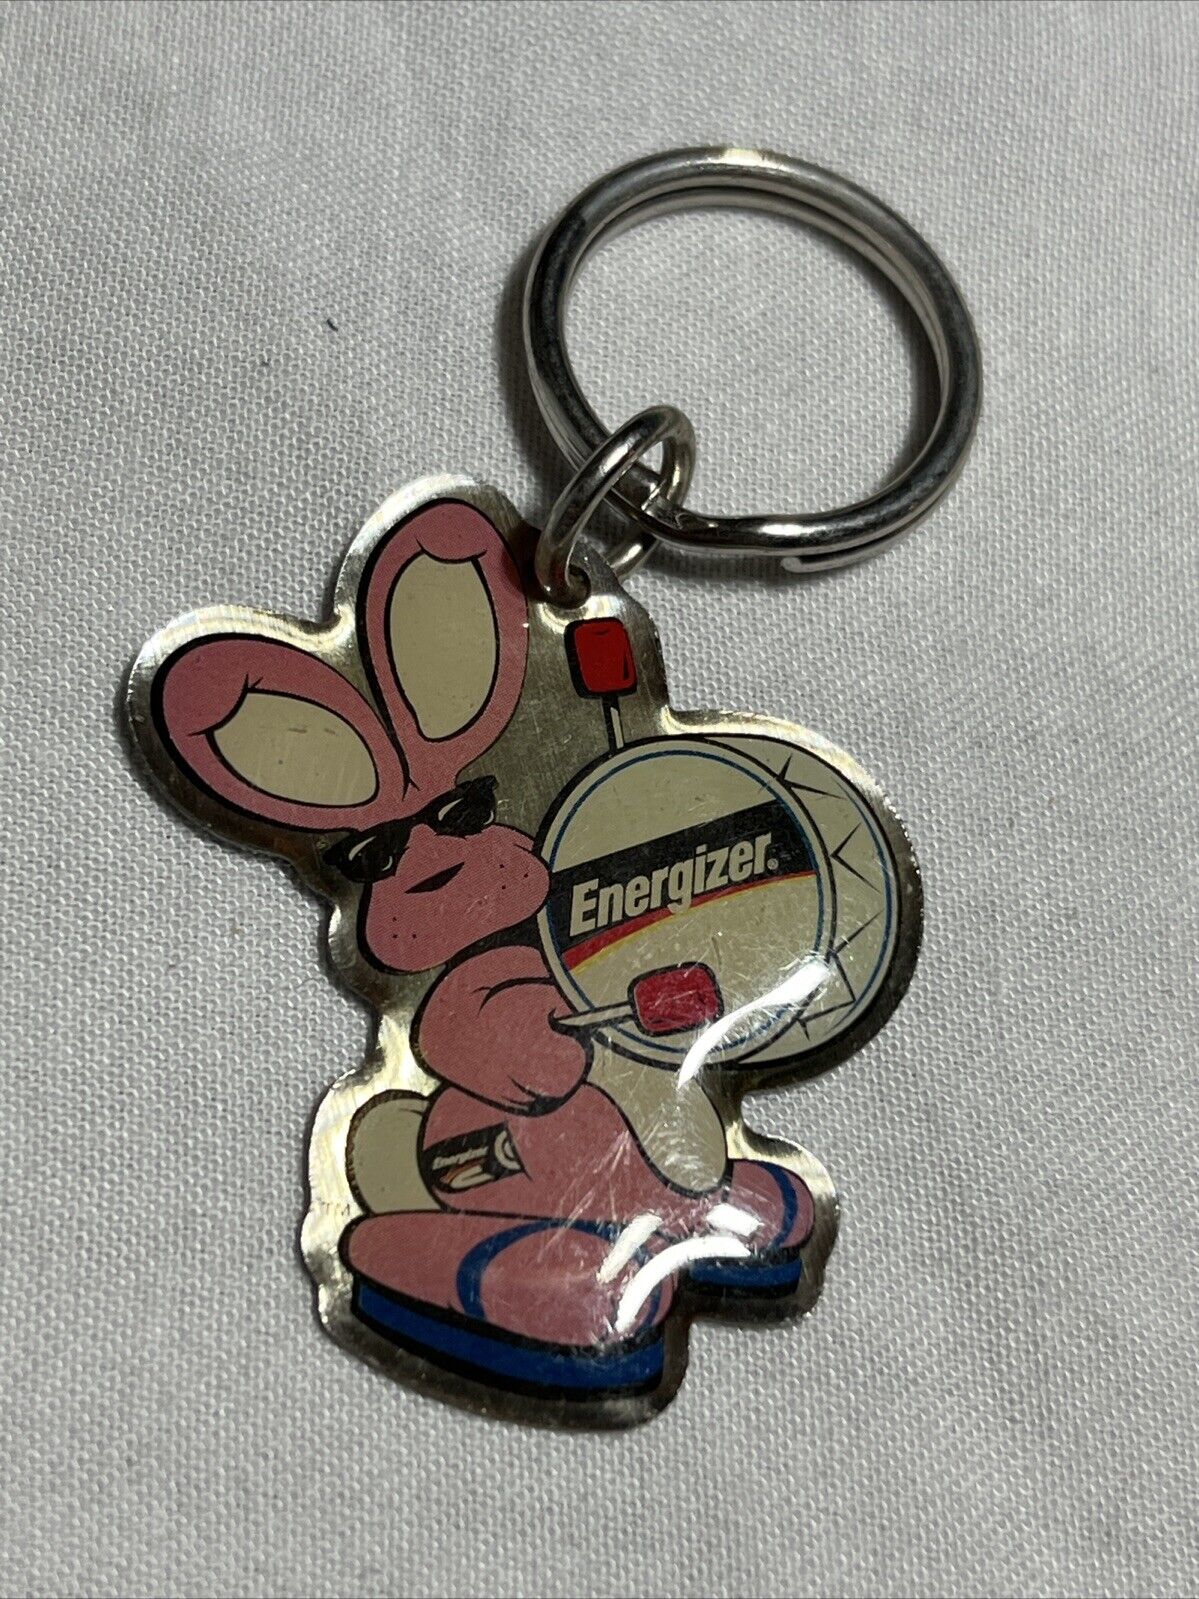 2009 Energizer Battery Bunny Advertising Keychain